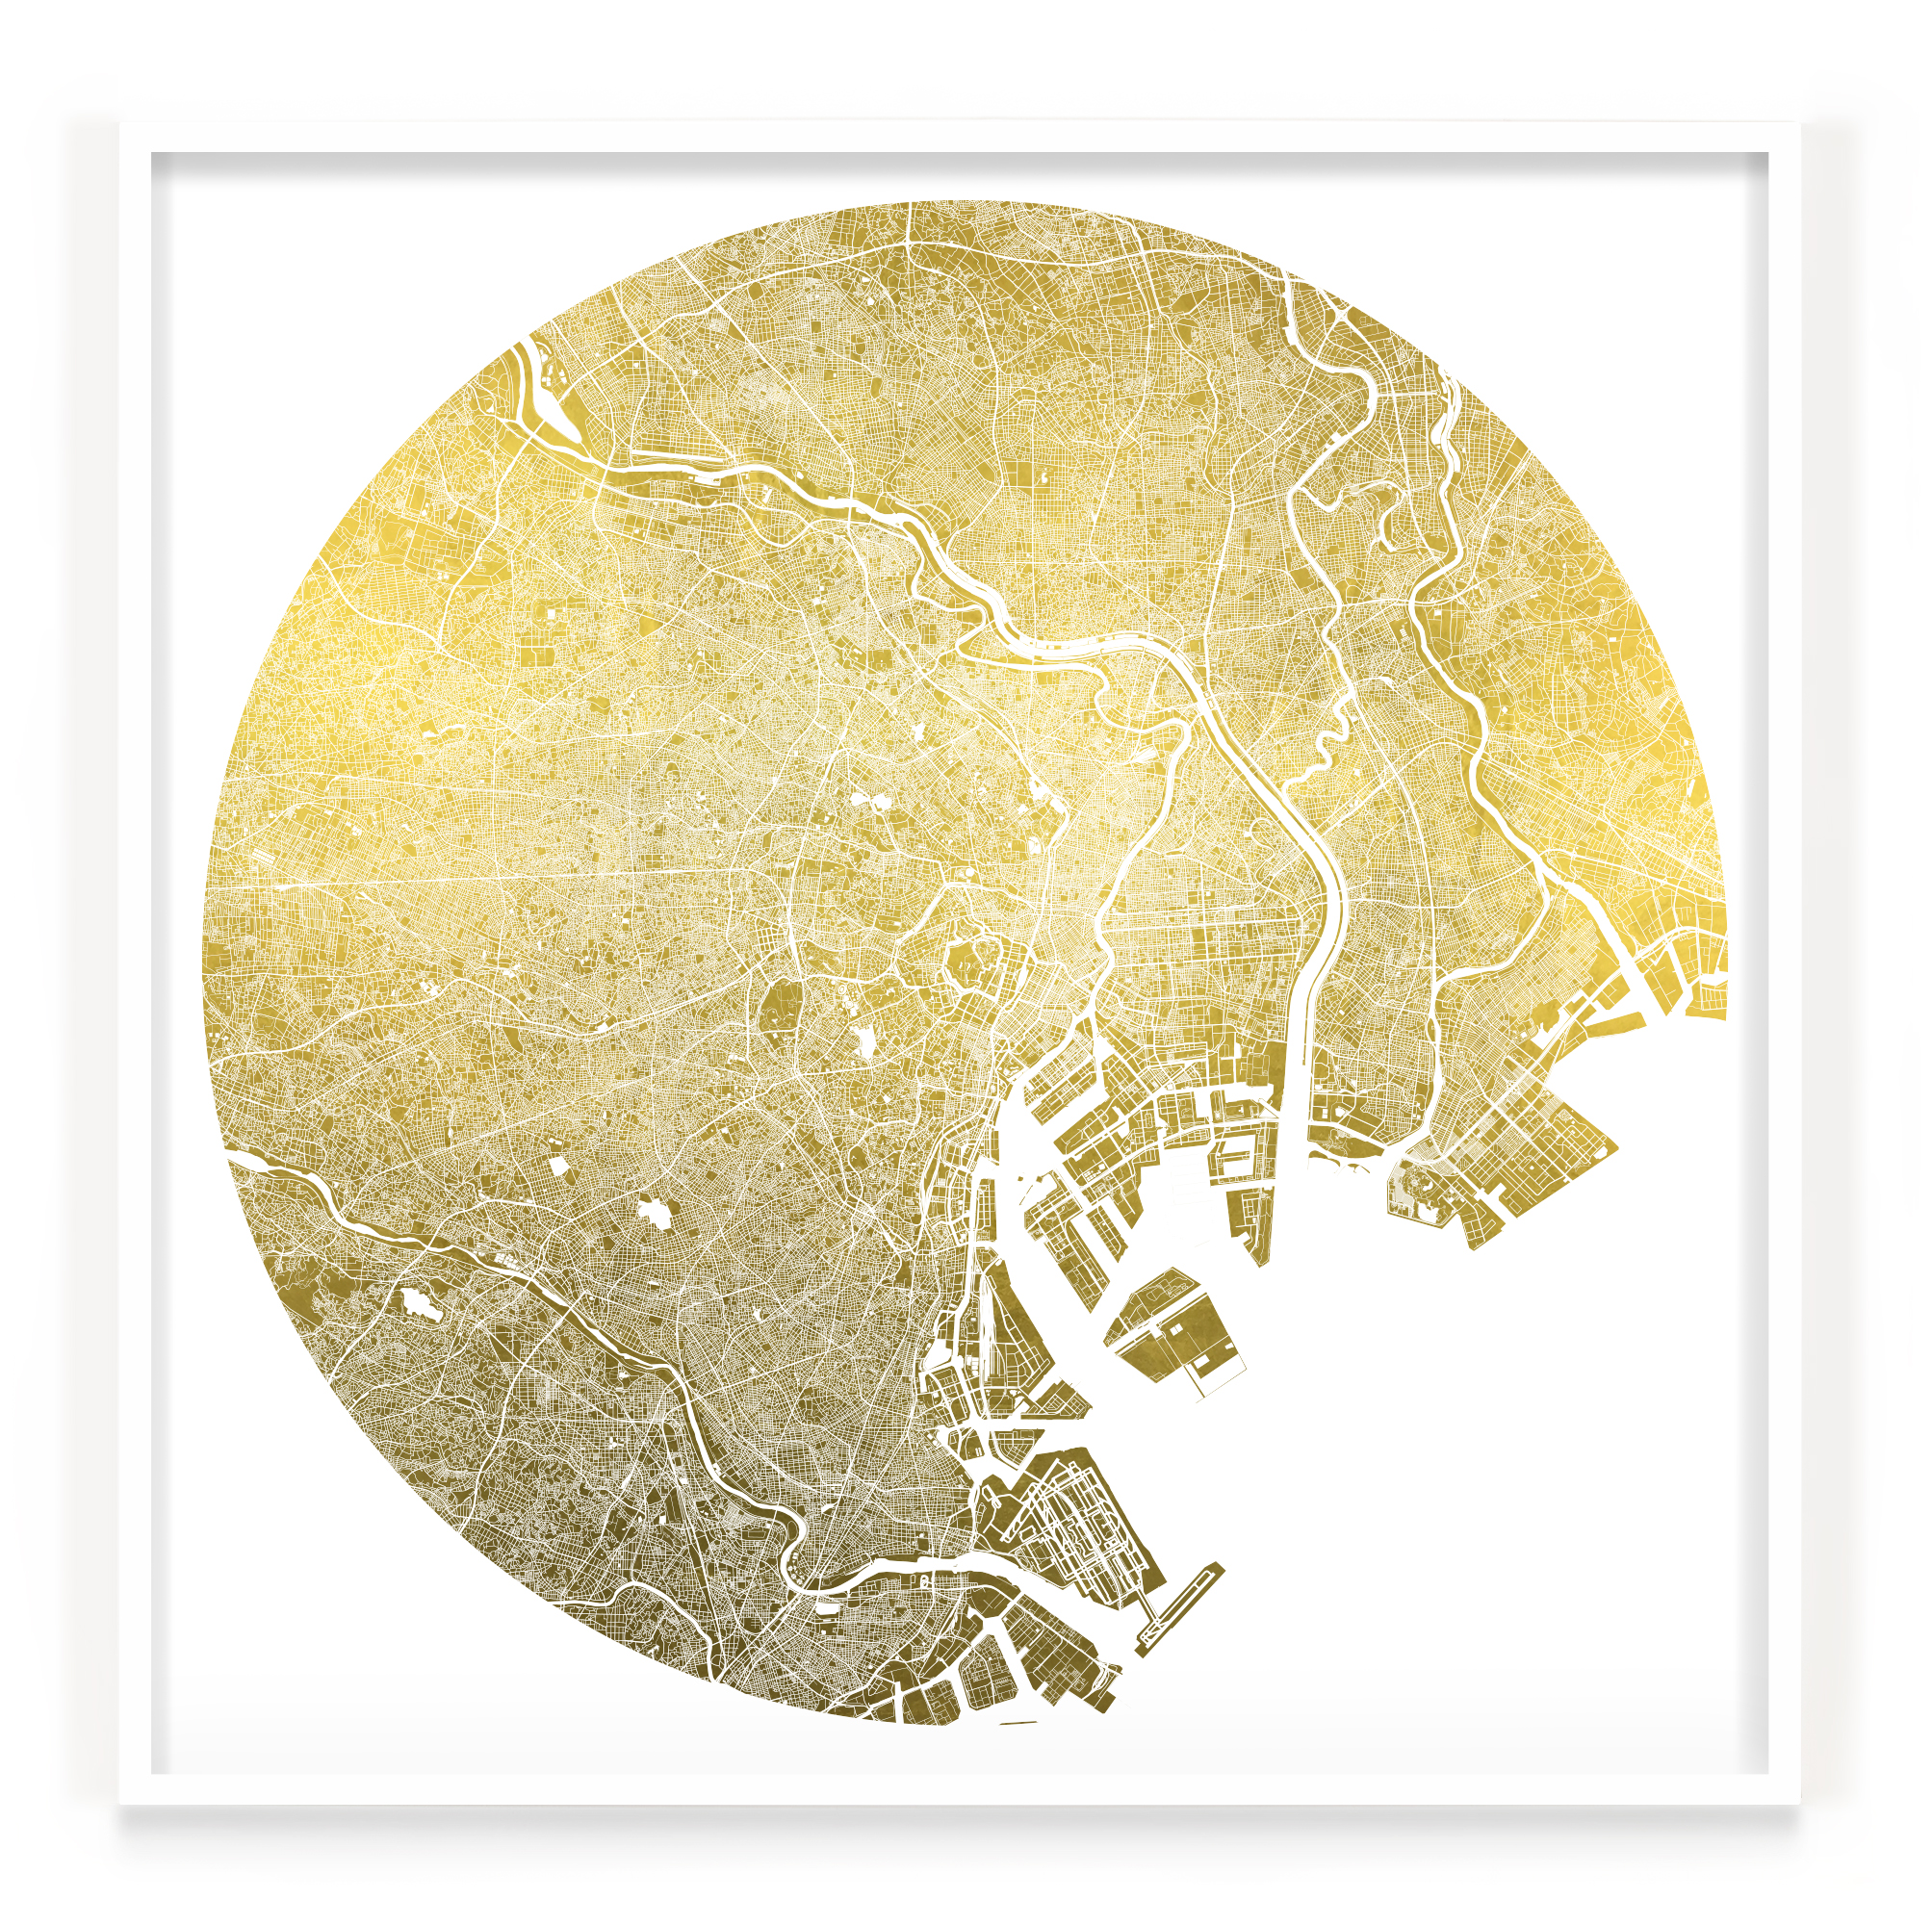 Mappa Mundi Tokyo (Greater) - from $3,000